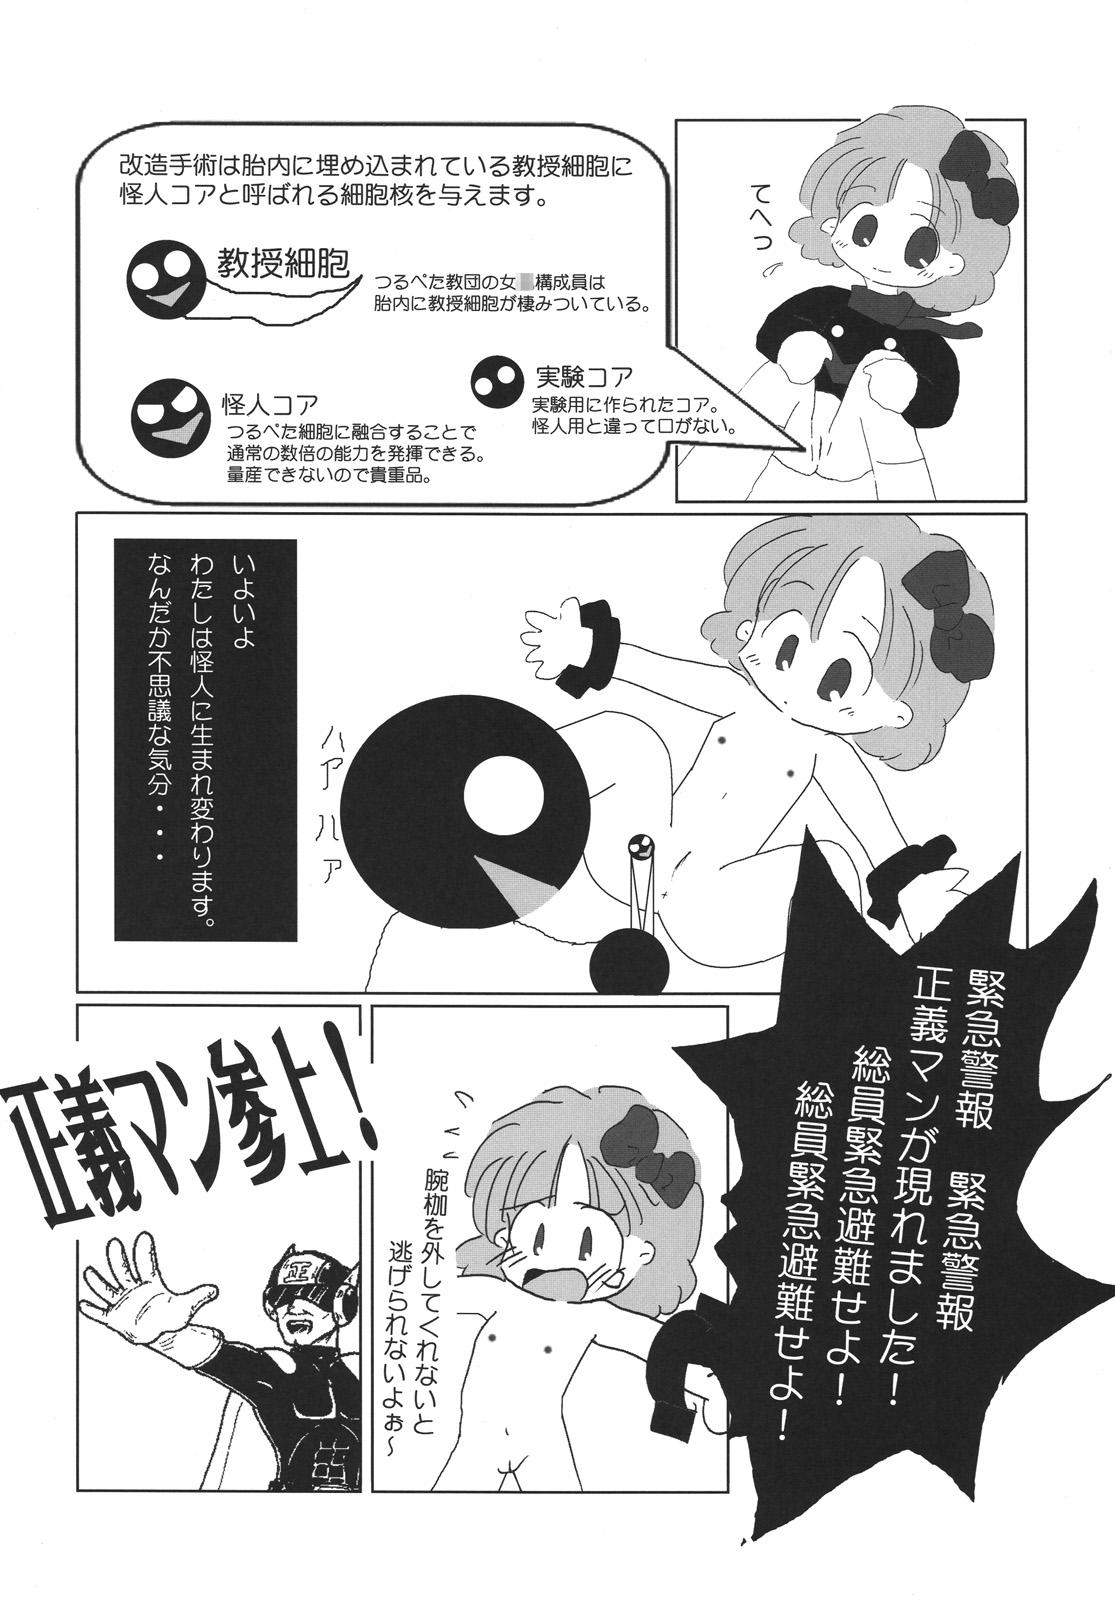 Big Penis Tsurupeta Kenkyuu Houkokusho "Kakyuu Sentou In no Isshou" - Turupeta Research Report Exposed - Page 7